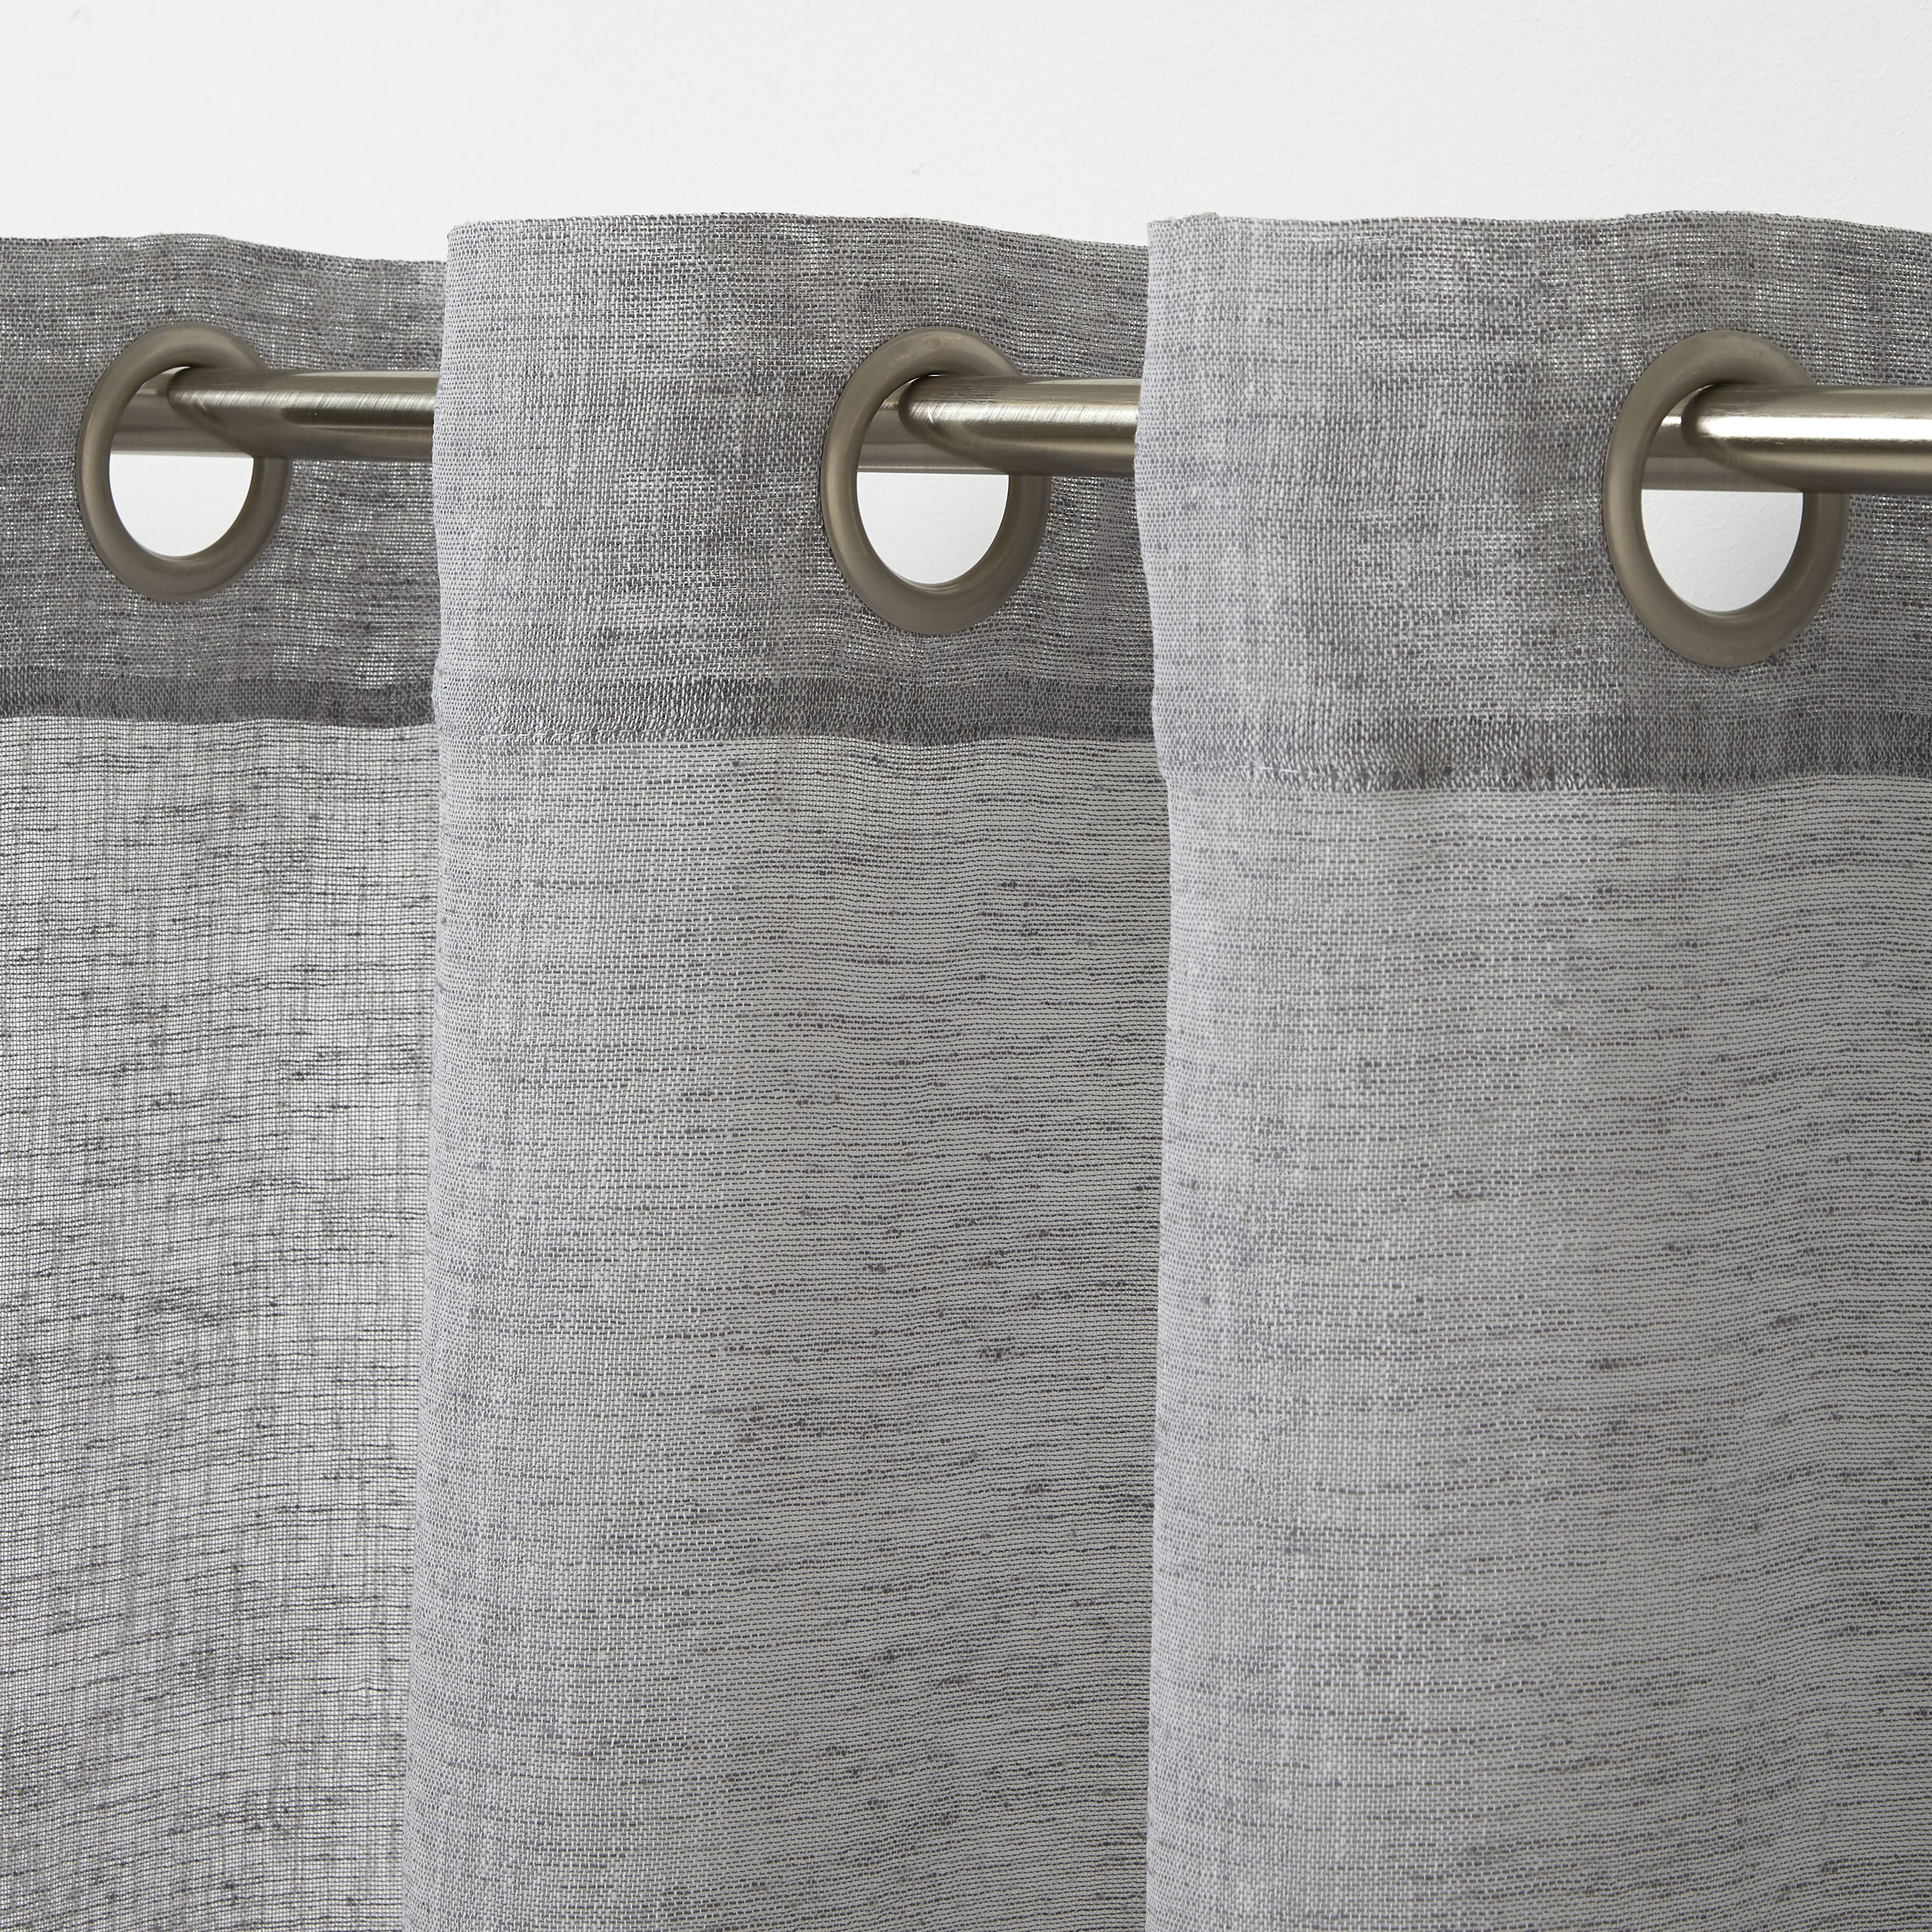 Howley Grey Plain Unlined Eyelet Voile curtain (W)140cm (L)260cm, Single